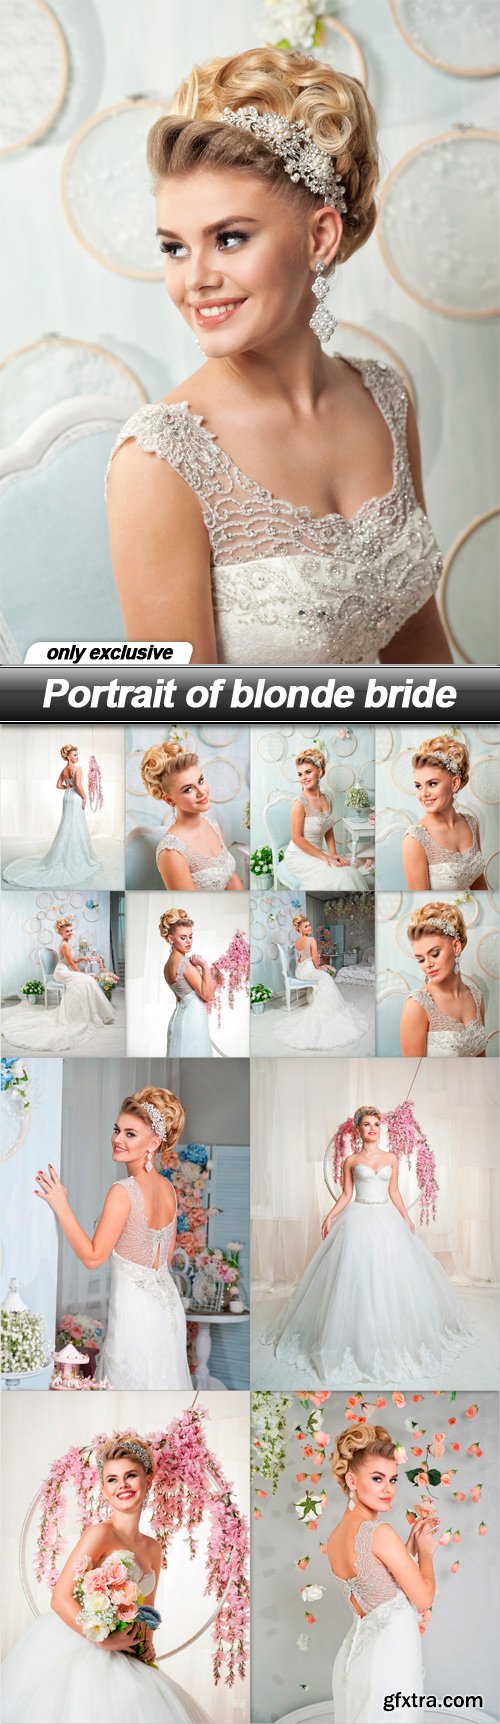 Portrait of blonde bride - 12 UHQ JPEG